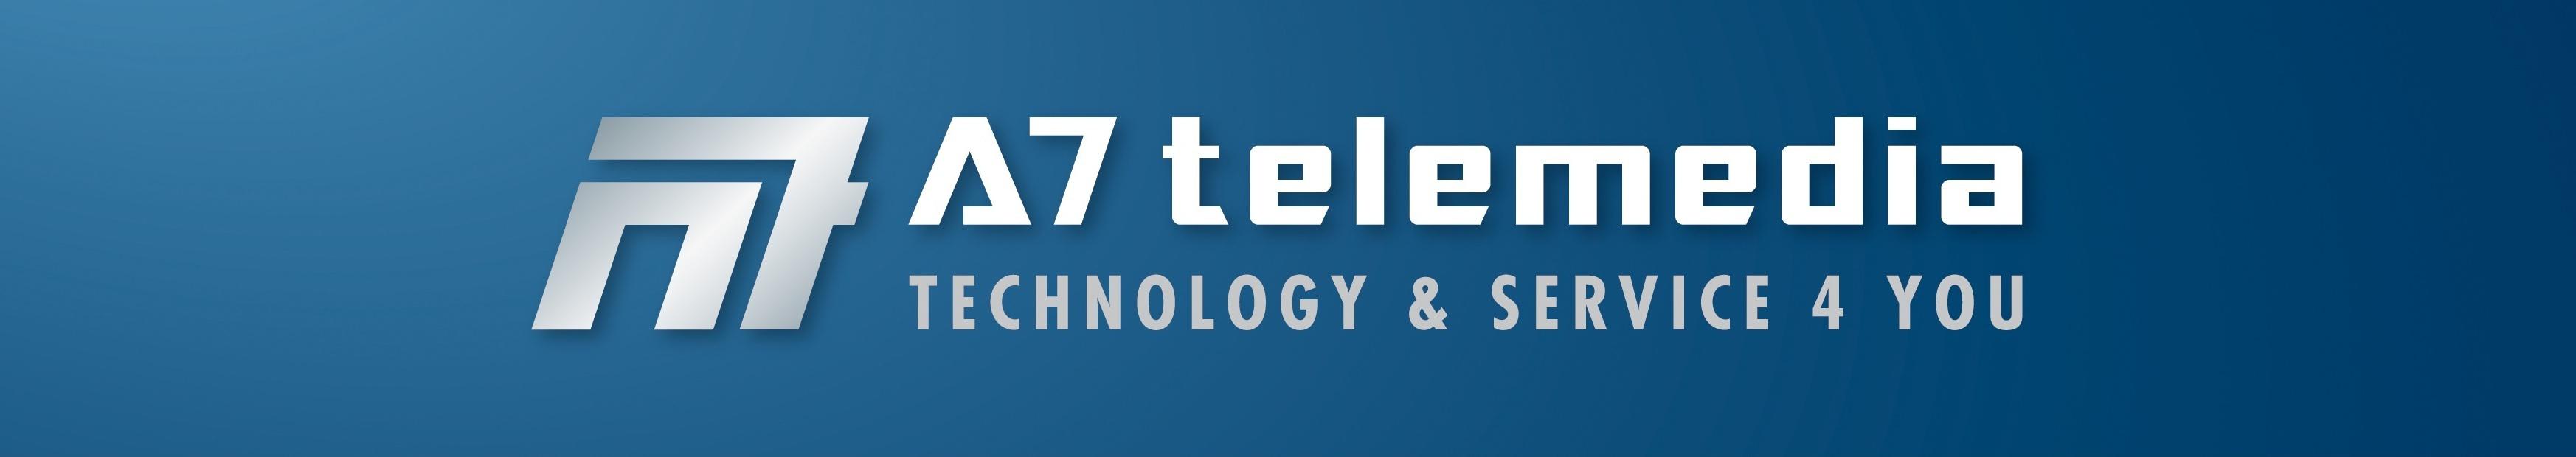 Banner A7-telemedia